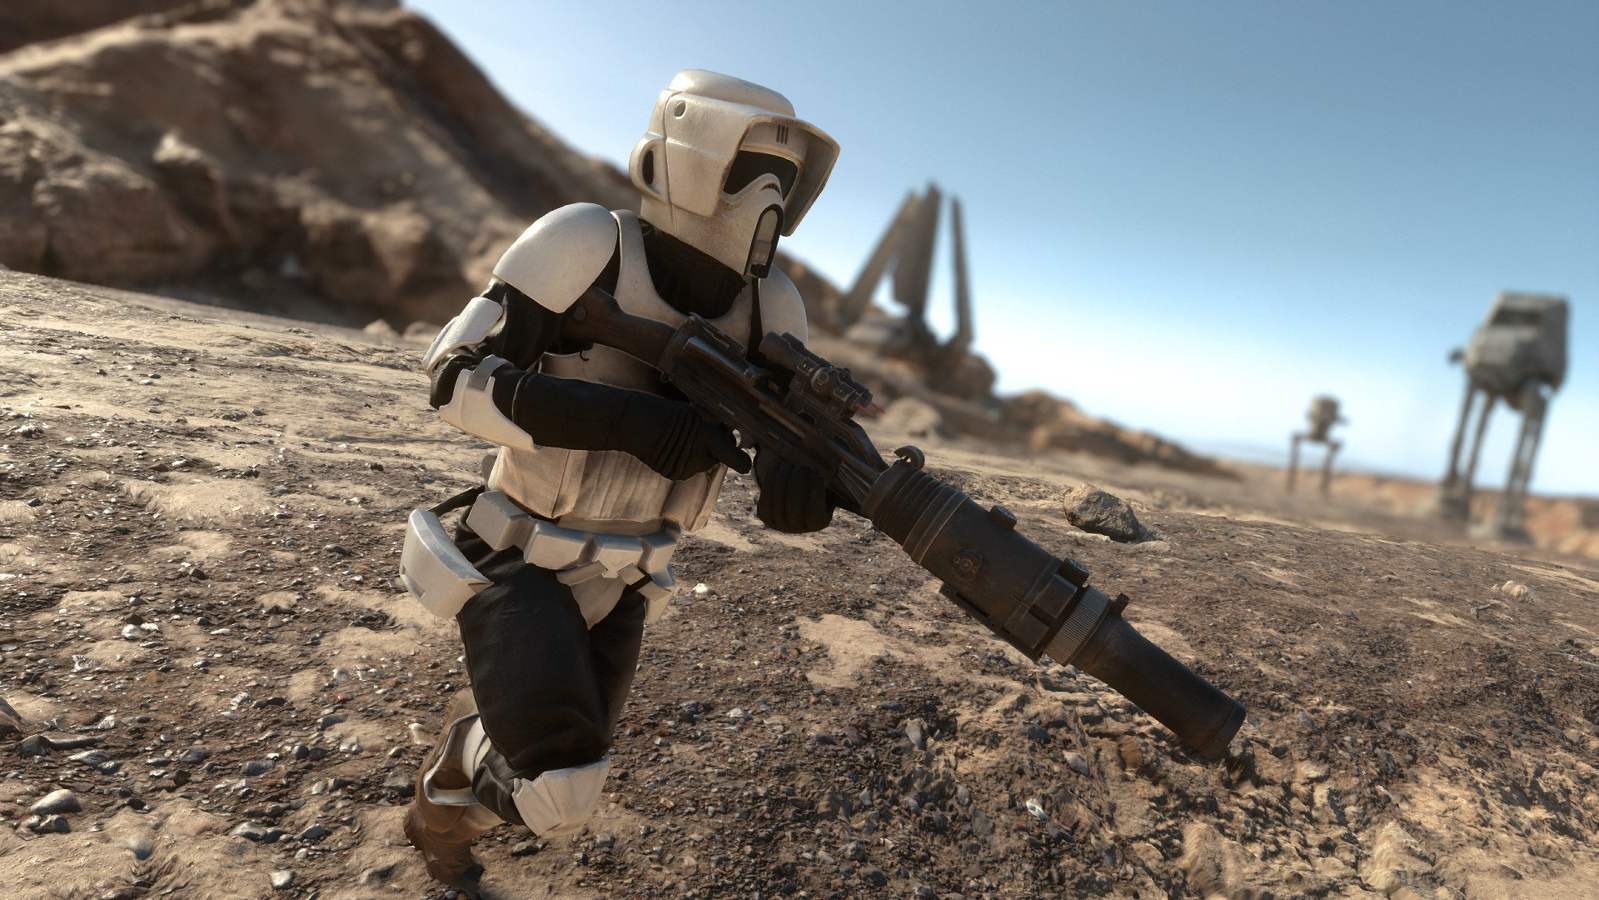 Scout trooper on Tatooine.